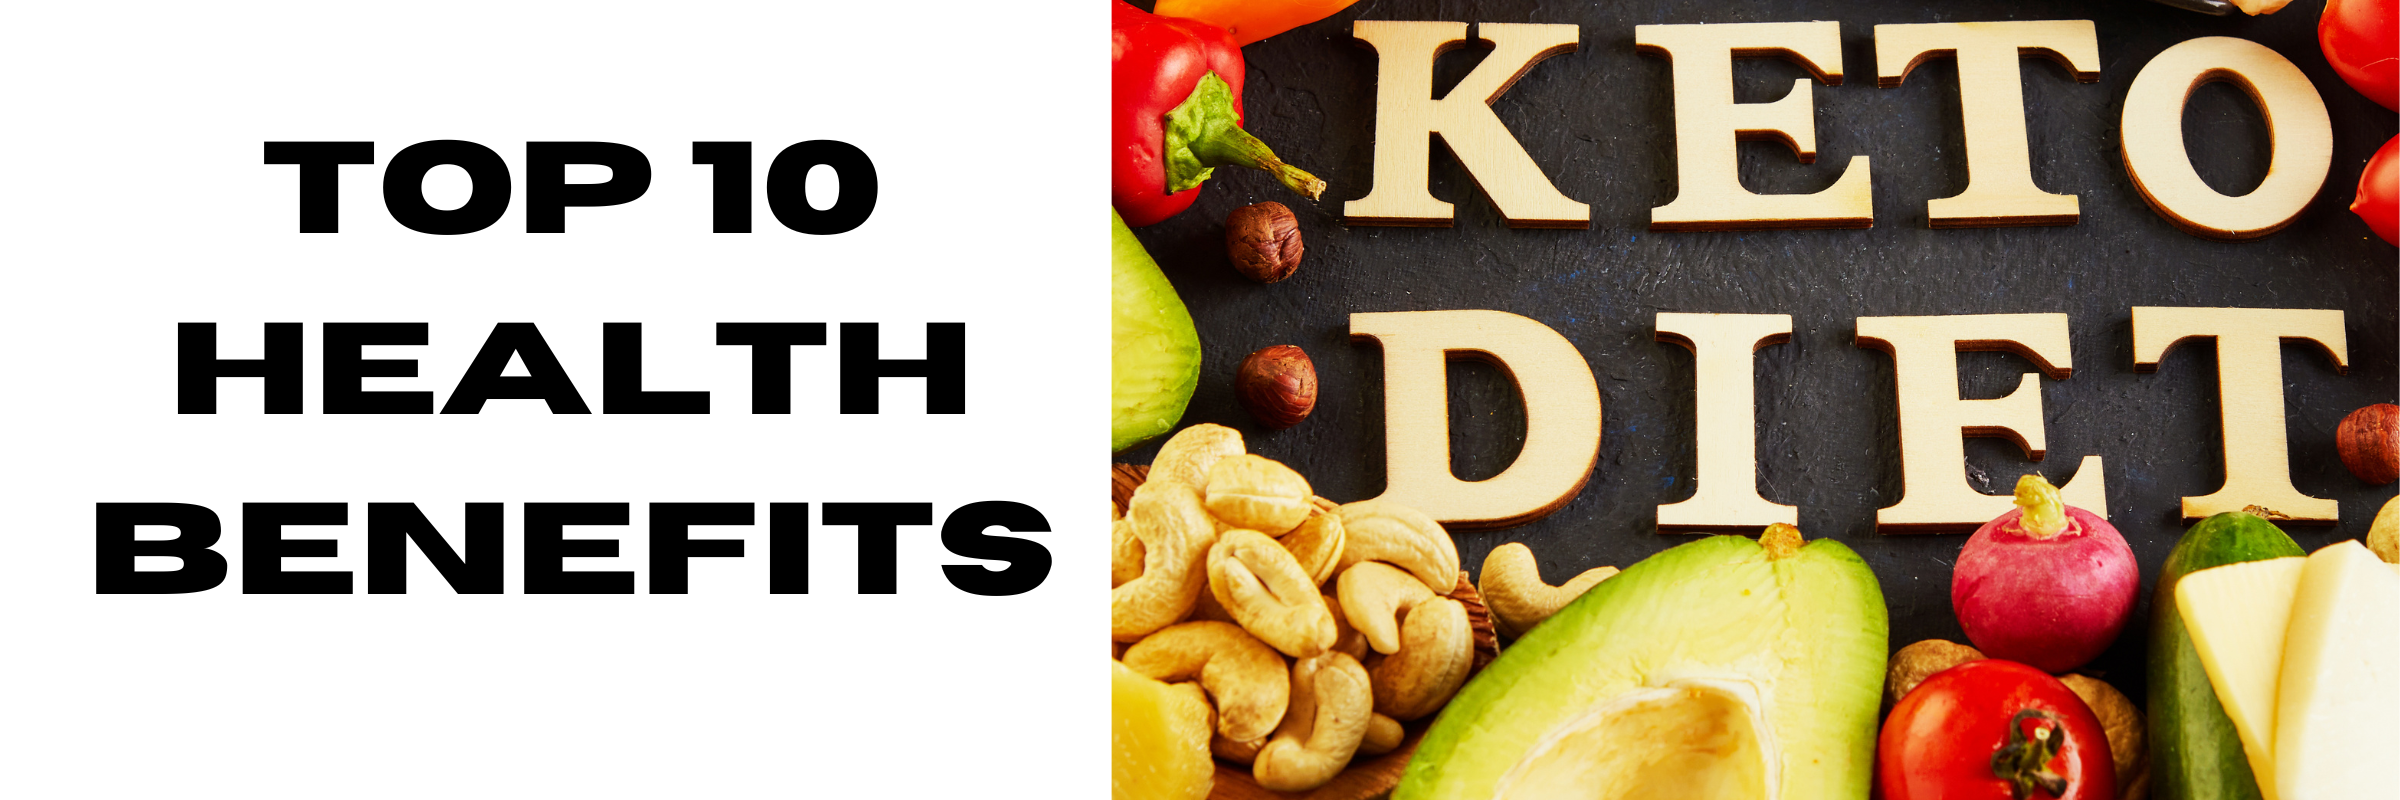 keto health benefits top 10